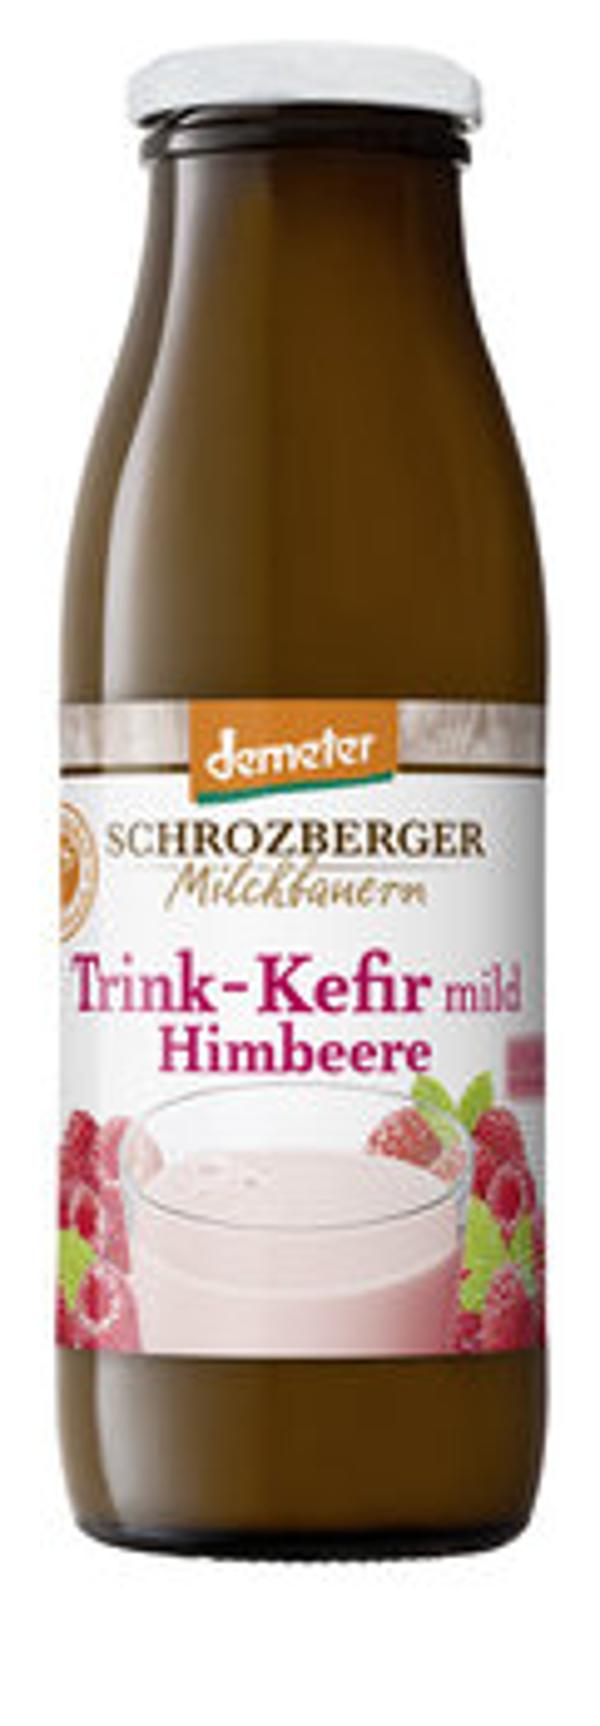 Produktfoto zu Schrozberger Trink-Kefir Mango - 0,5l